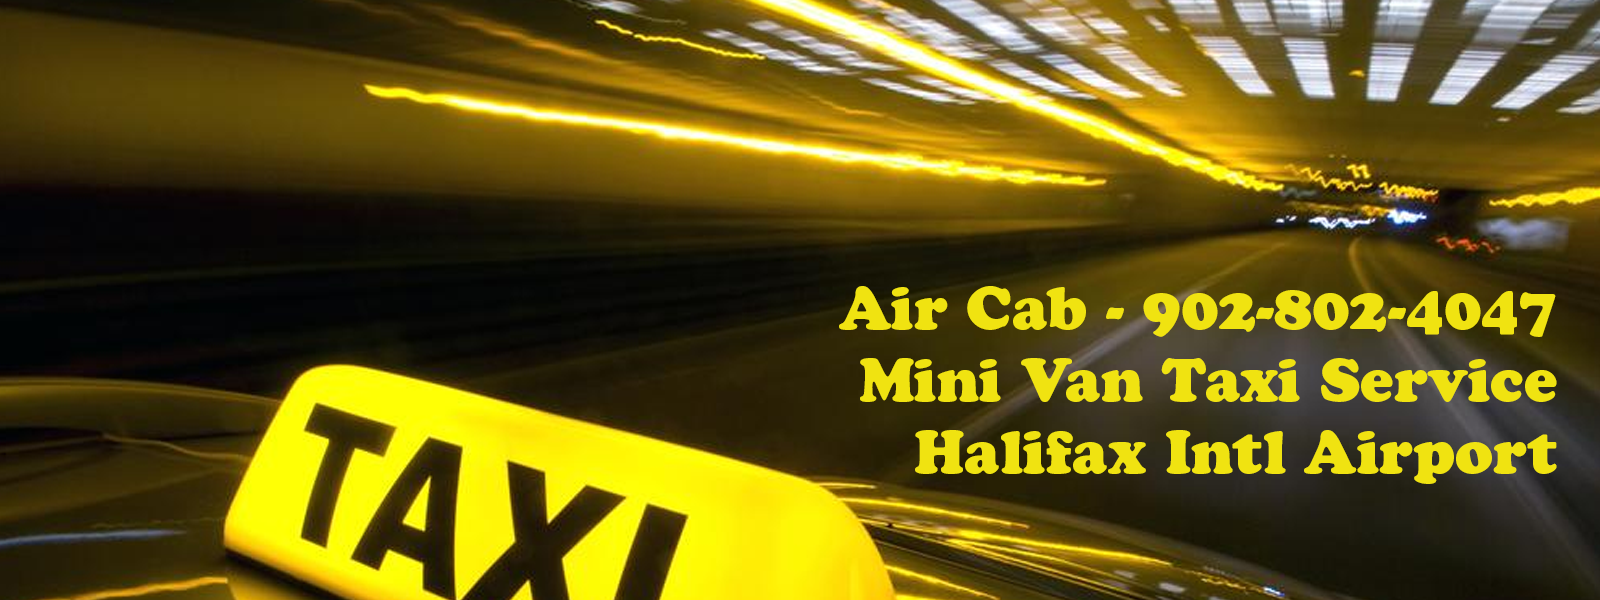 Halifax Airport Cab Service